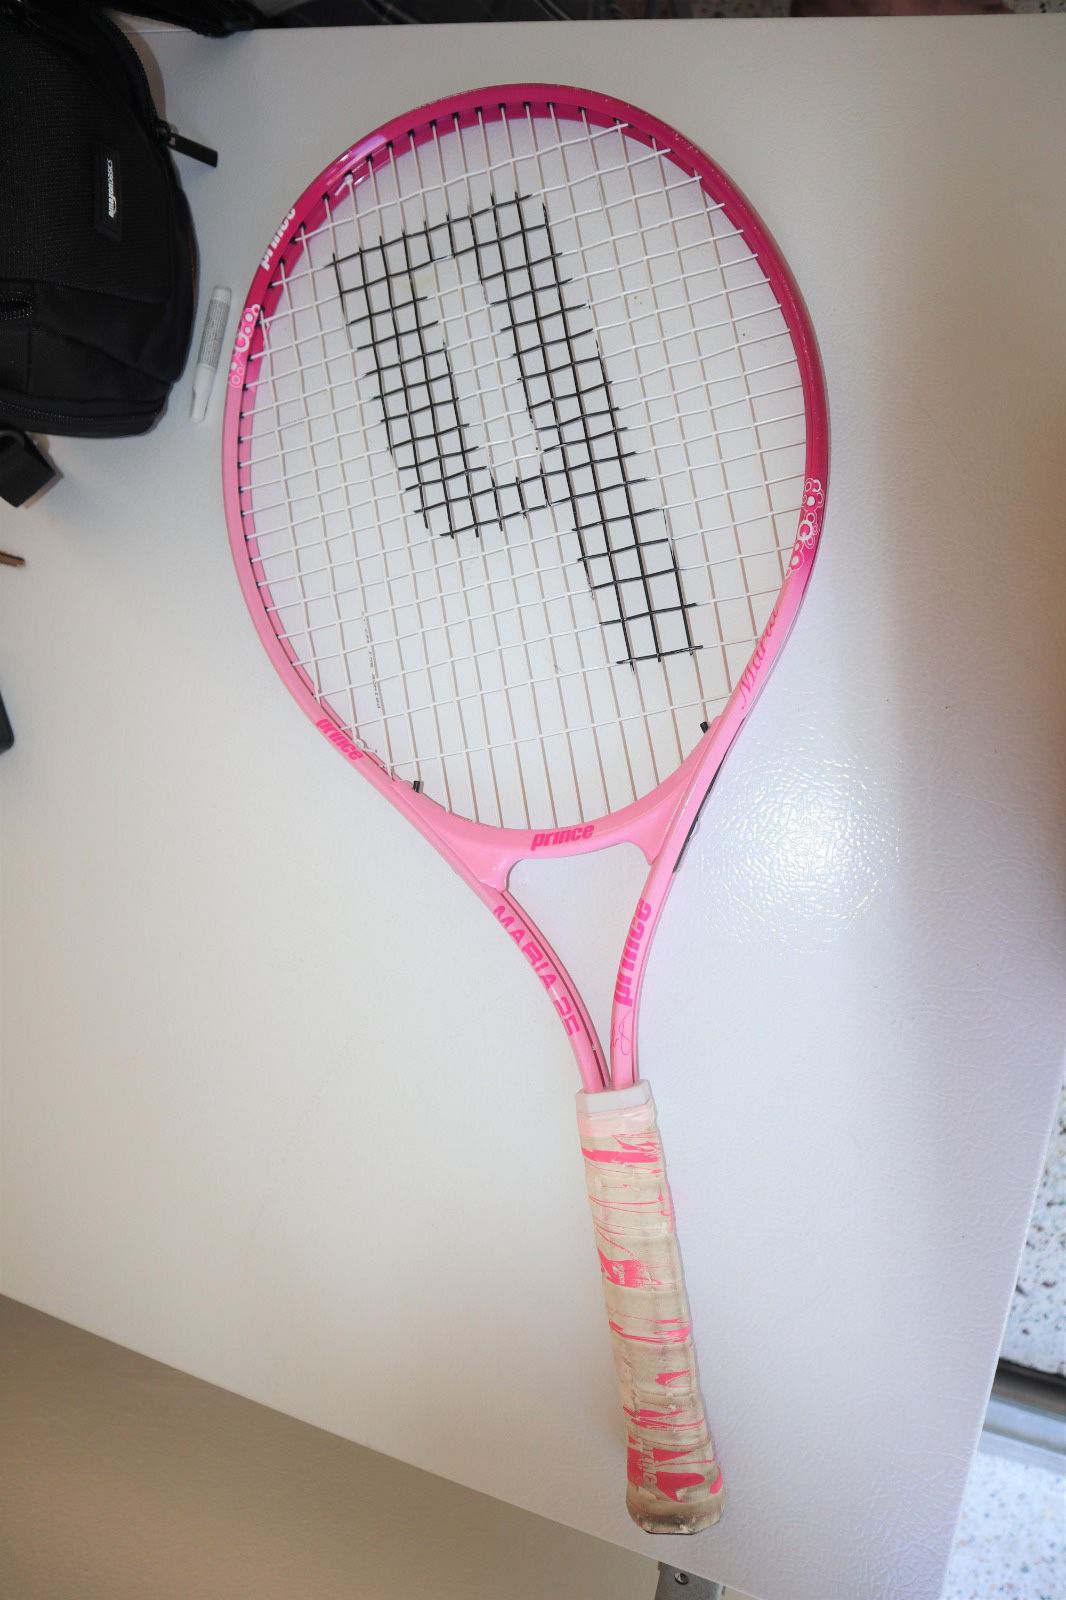 Prince Wimbledon Sharapova Tennis Racket Pink Oversize Fusionlite Maria 25